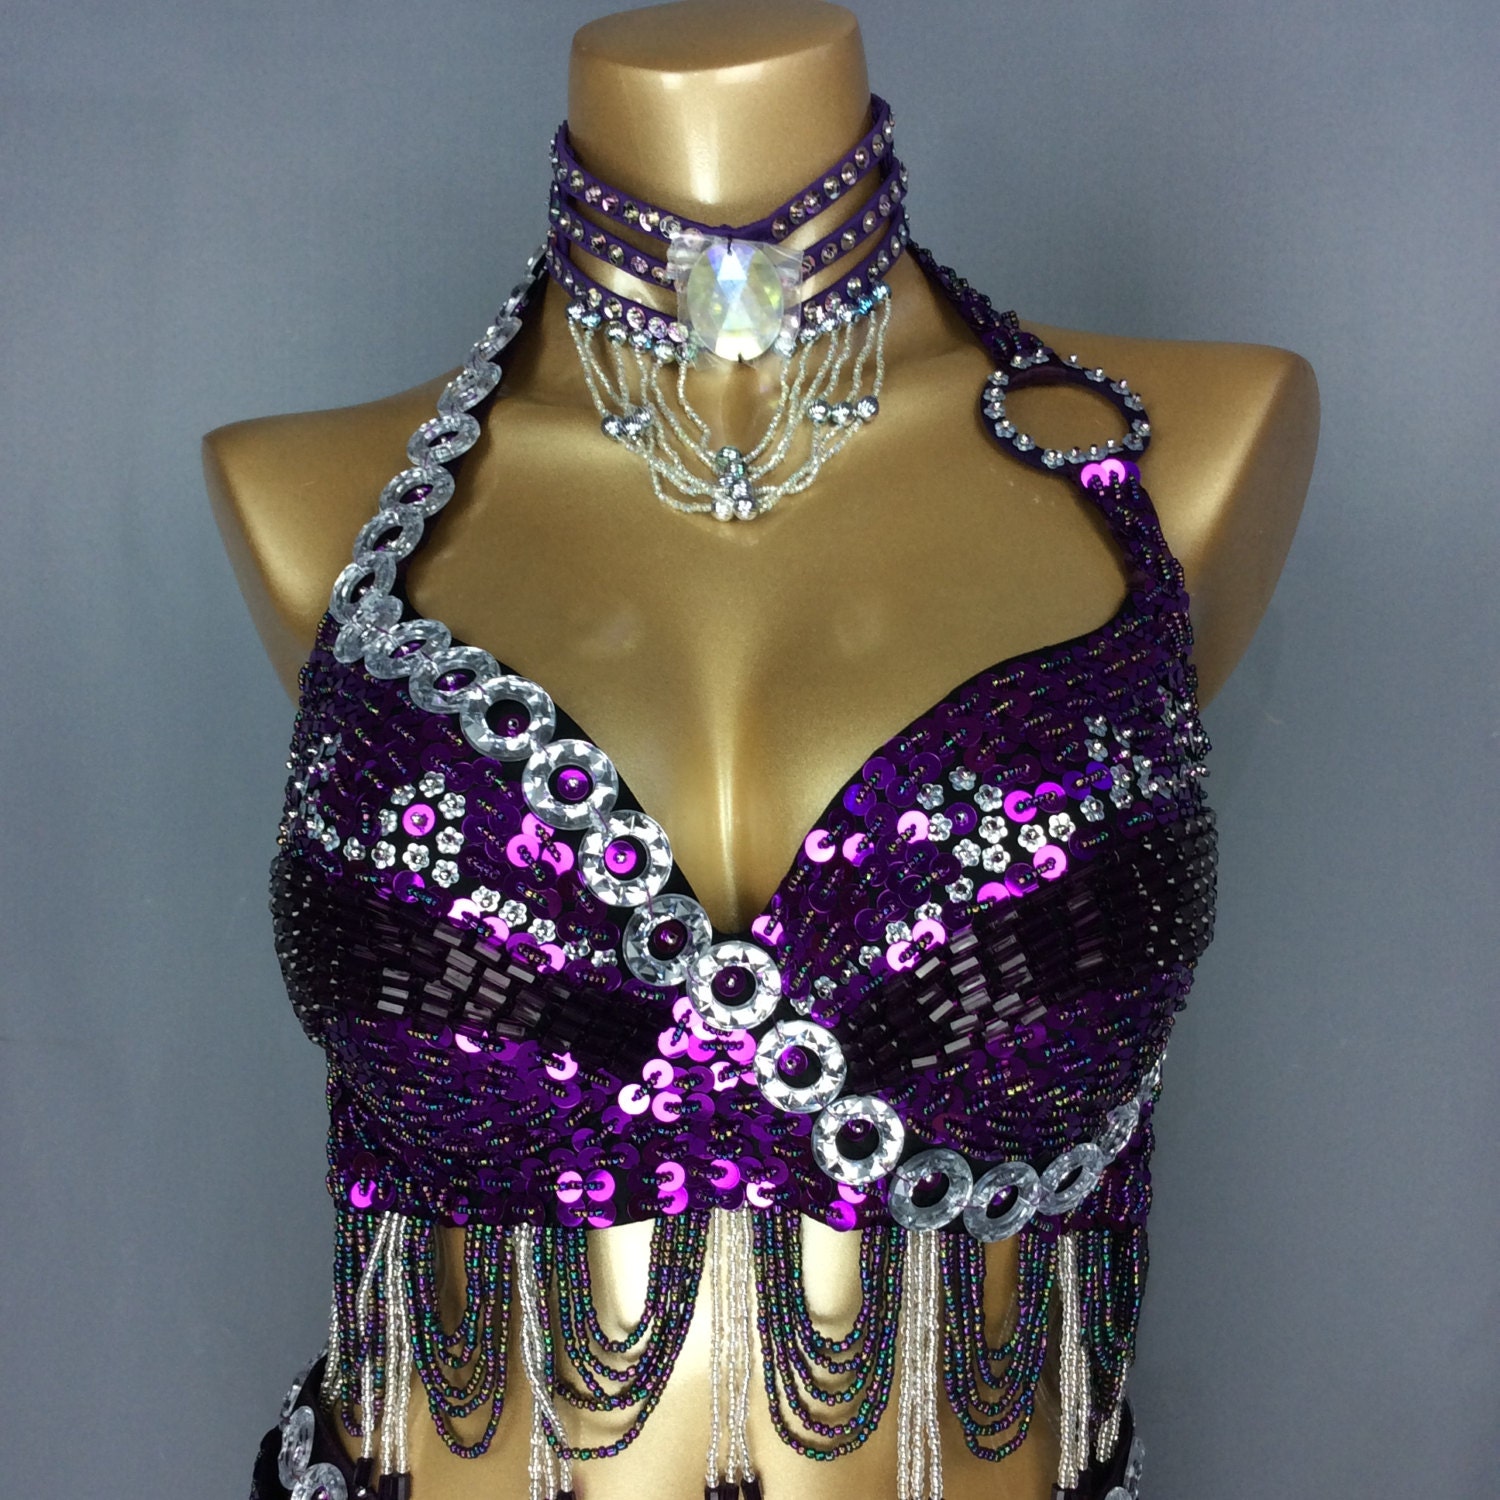 Sequin Beaded Costume Bra Size 36 C/D in Purple